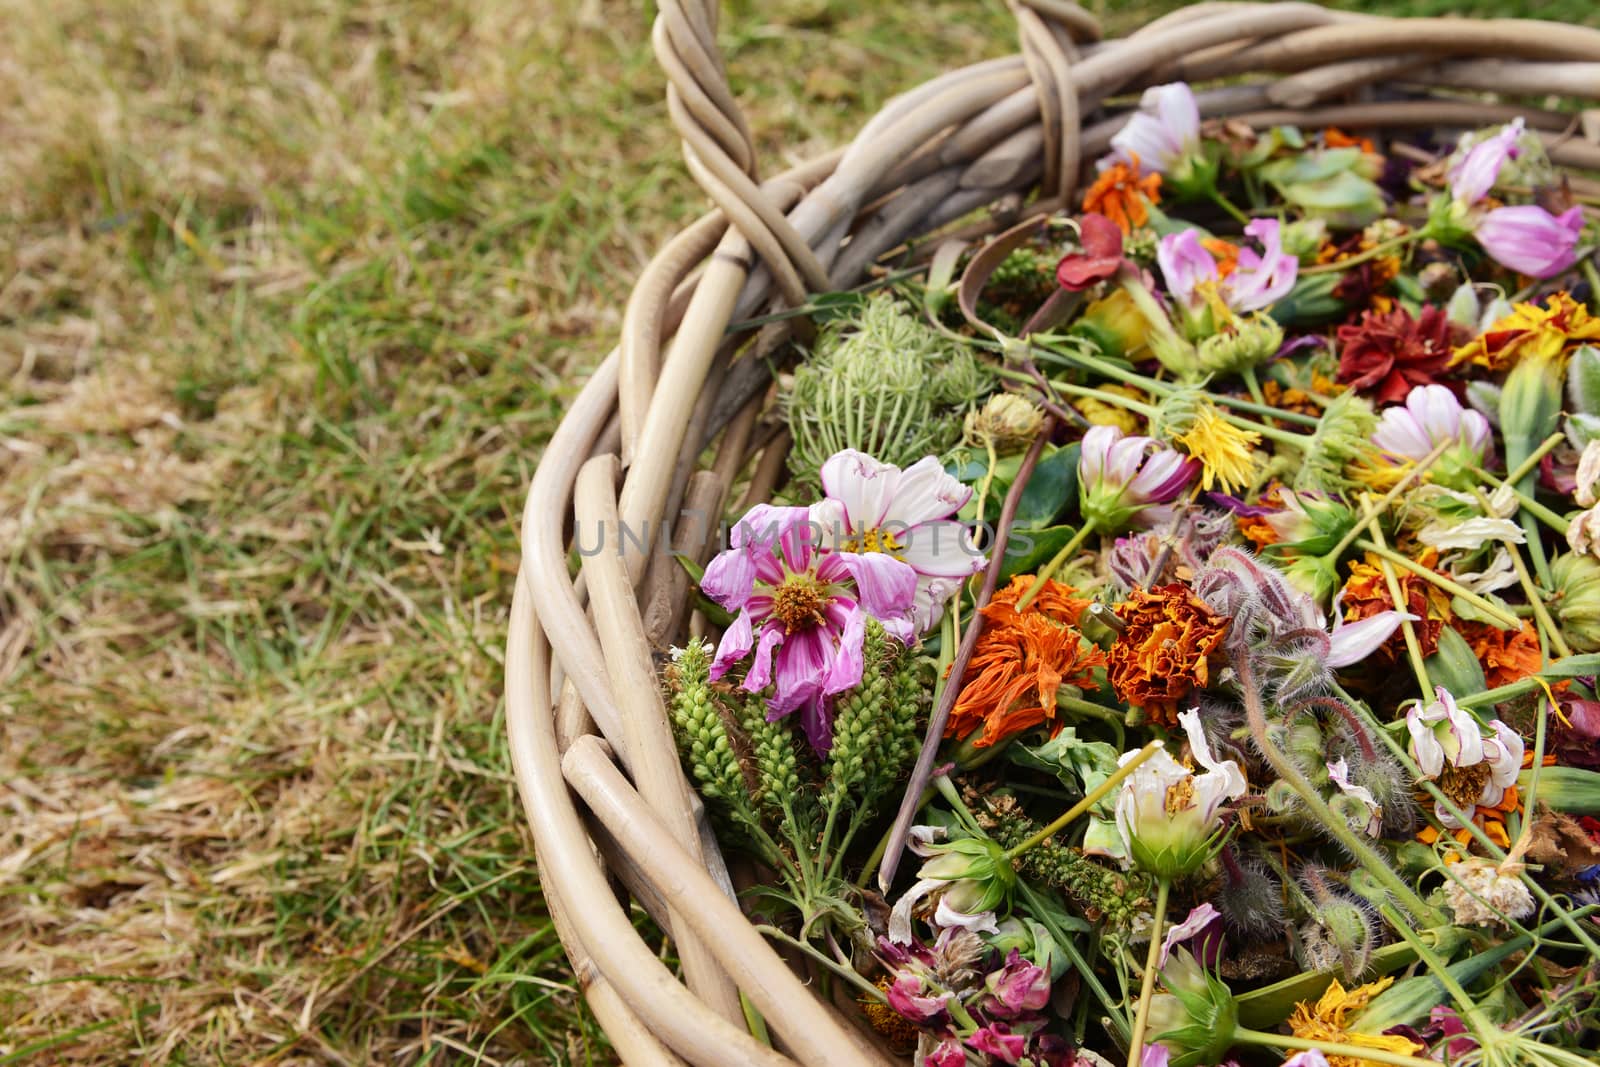 Cropped basket of faded flower blooms, deadheaded from a wide range of garden flowers